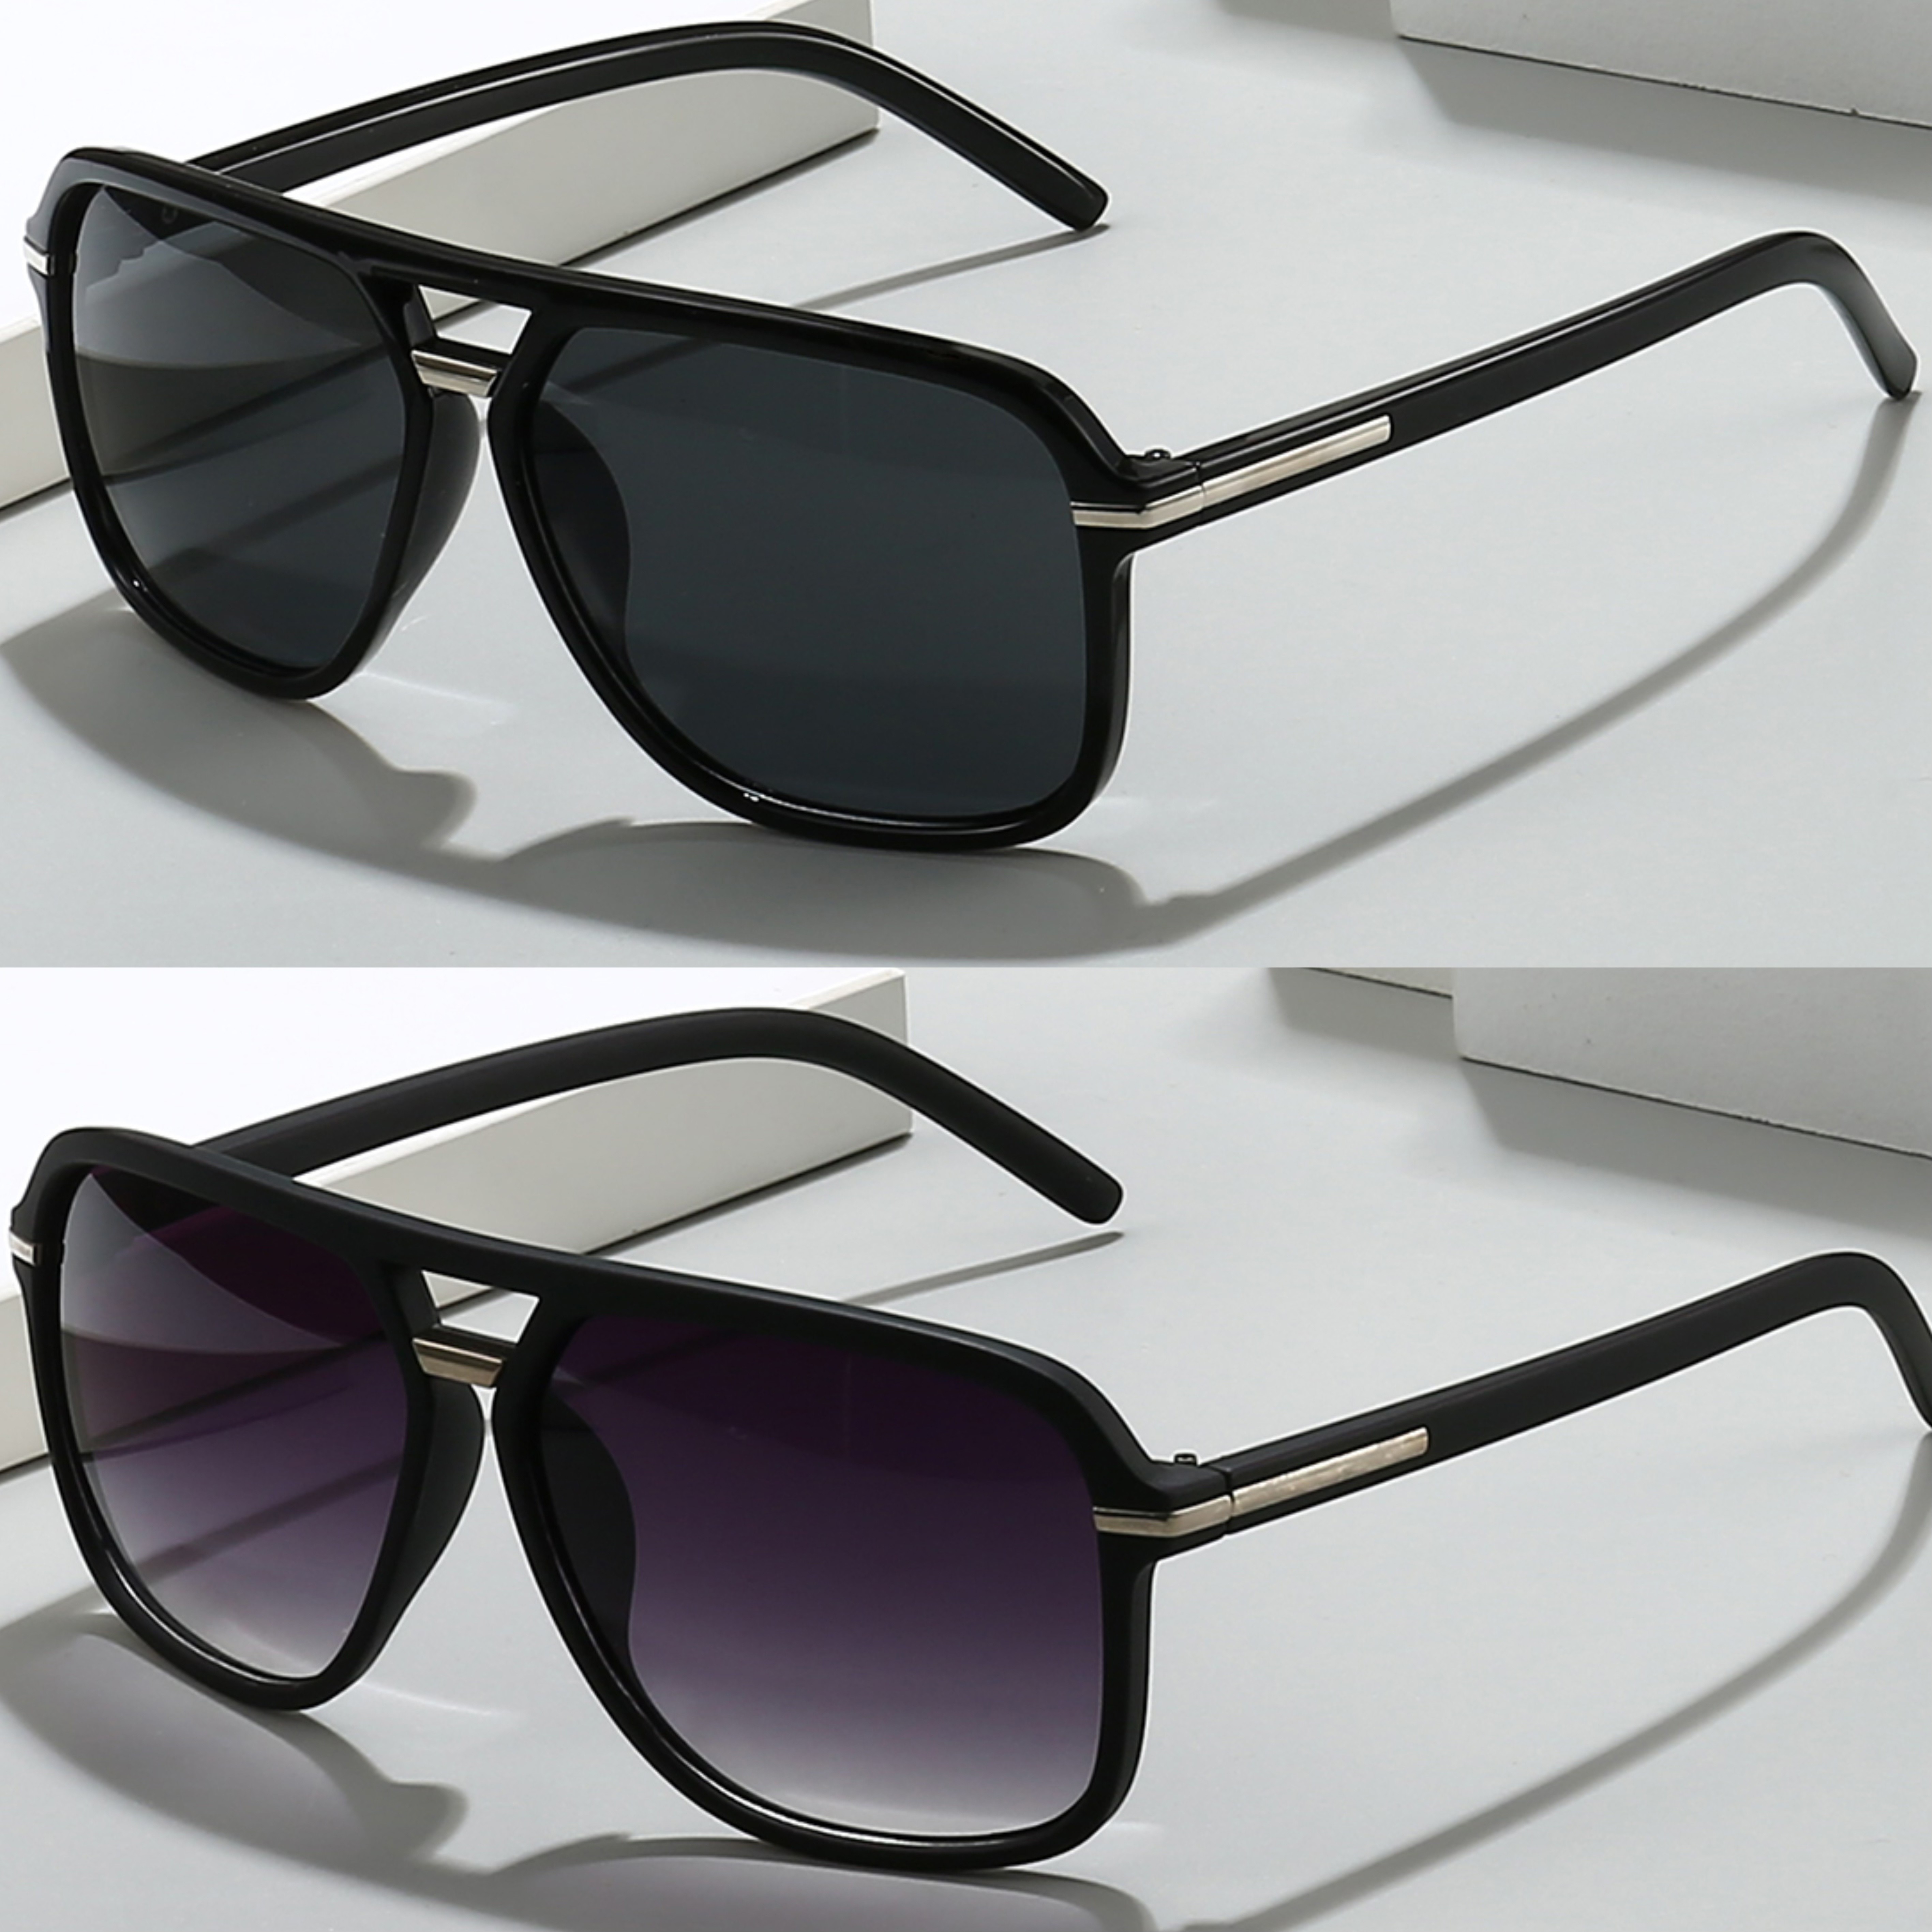 

2pcs Double Beam Frame Fashion Glasses For Women Anti Glare Sun Shades Glasses For Driving Beach Travel